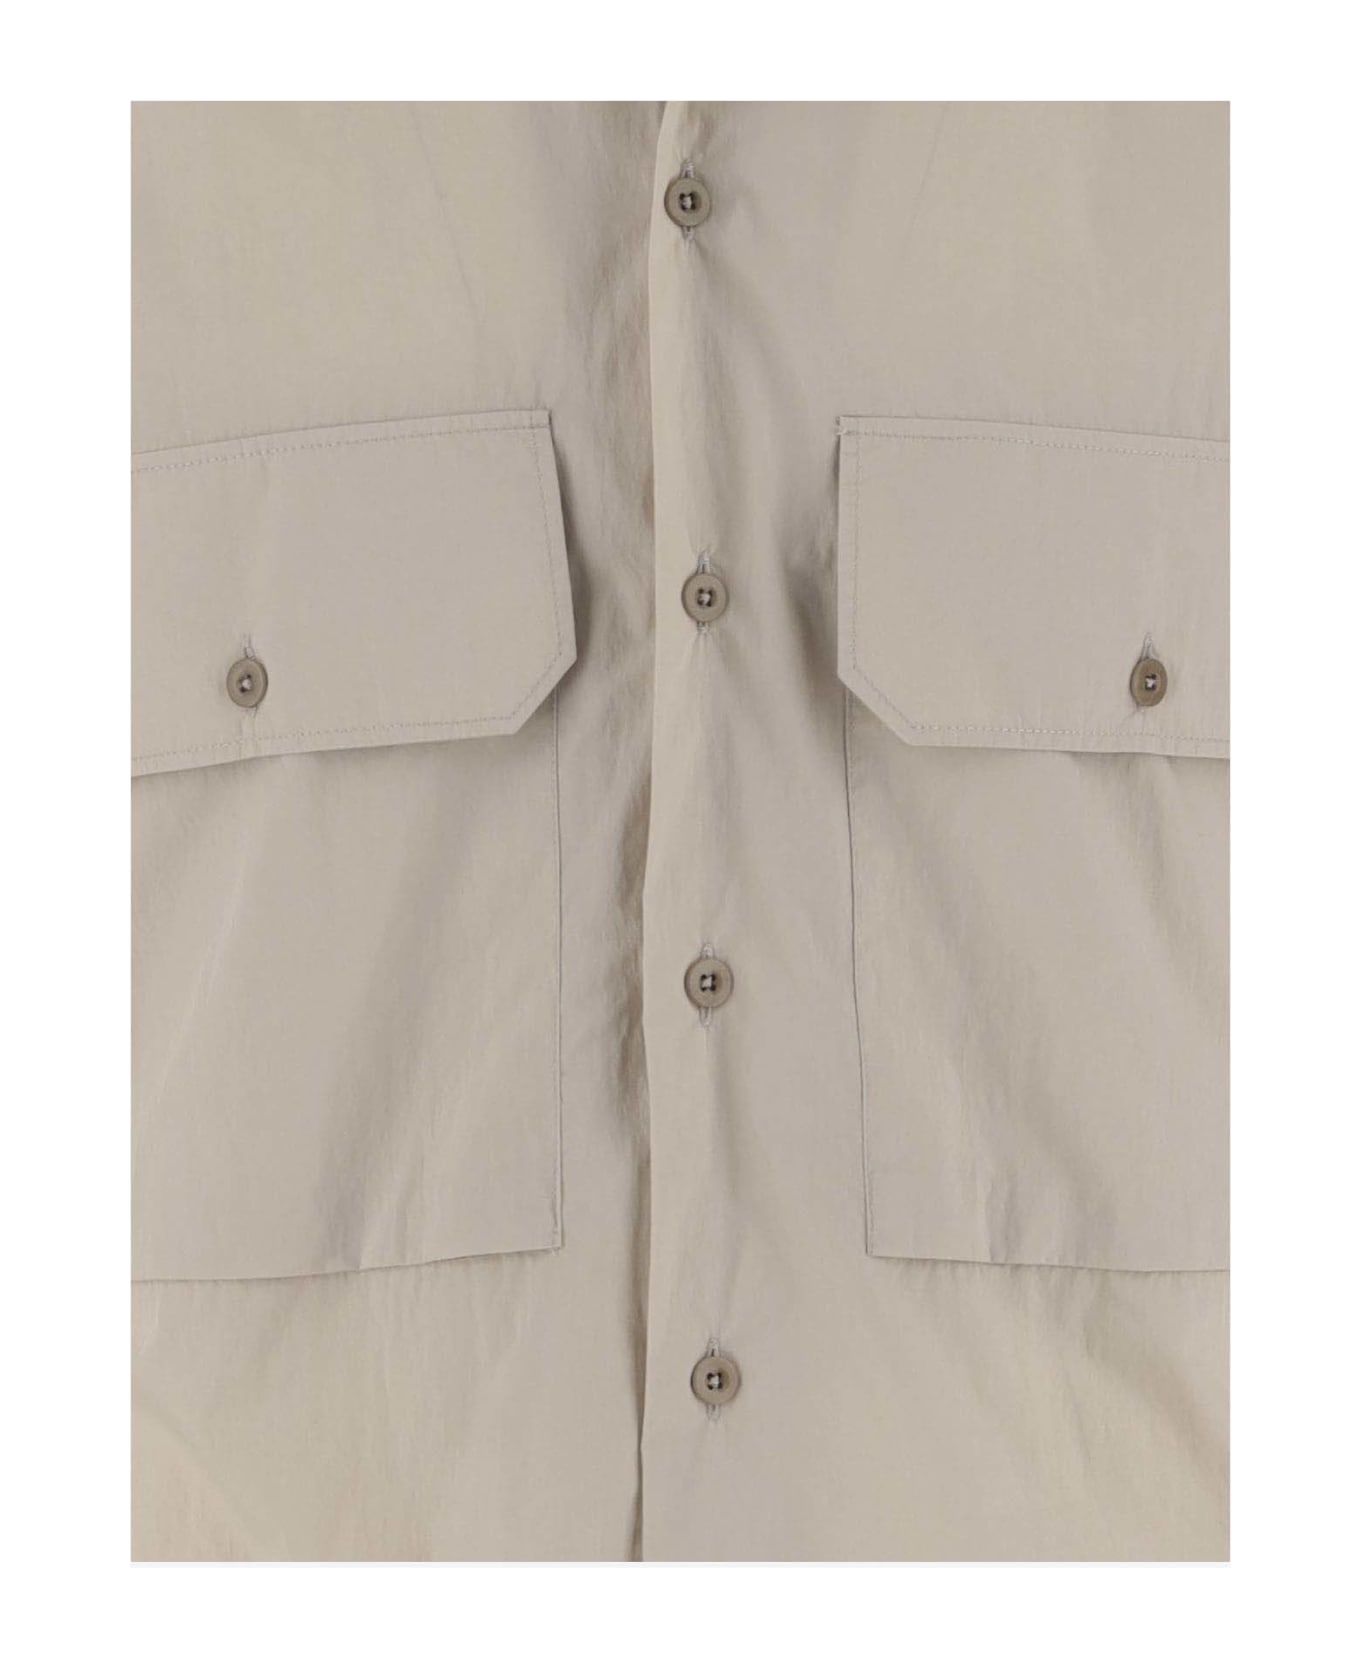 Ten C Cotton Blend Shirt - Beige シャツ